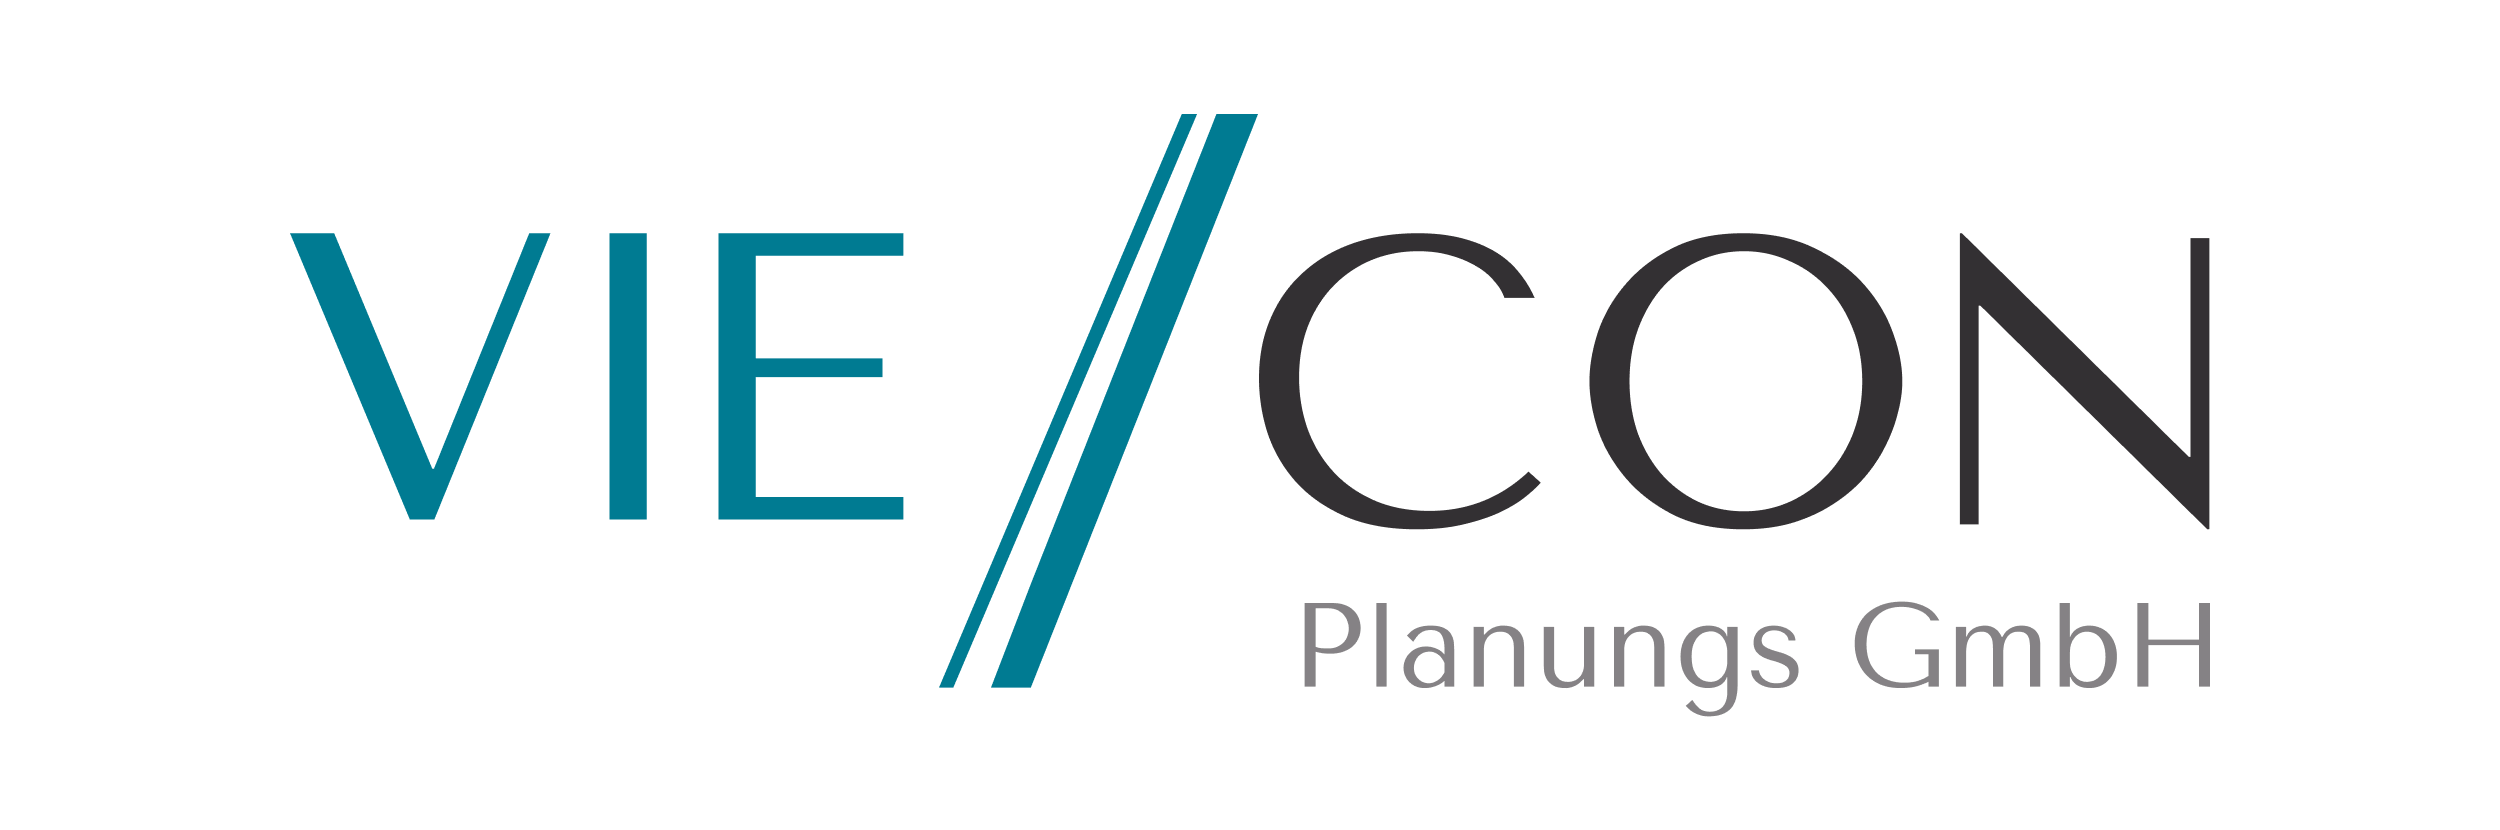 VIECON Planungs GmbH